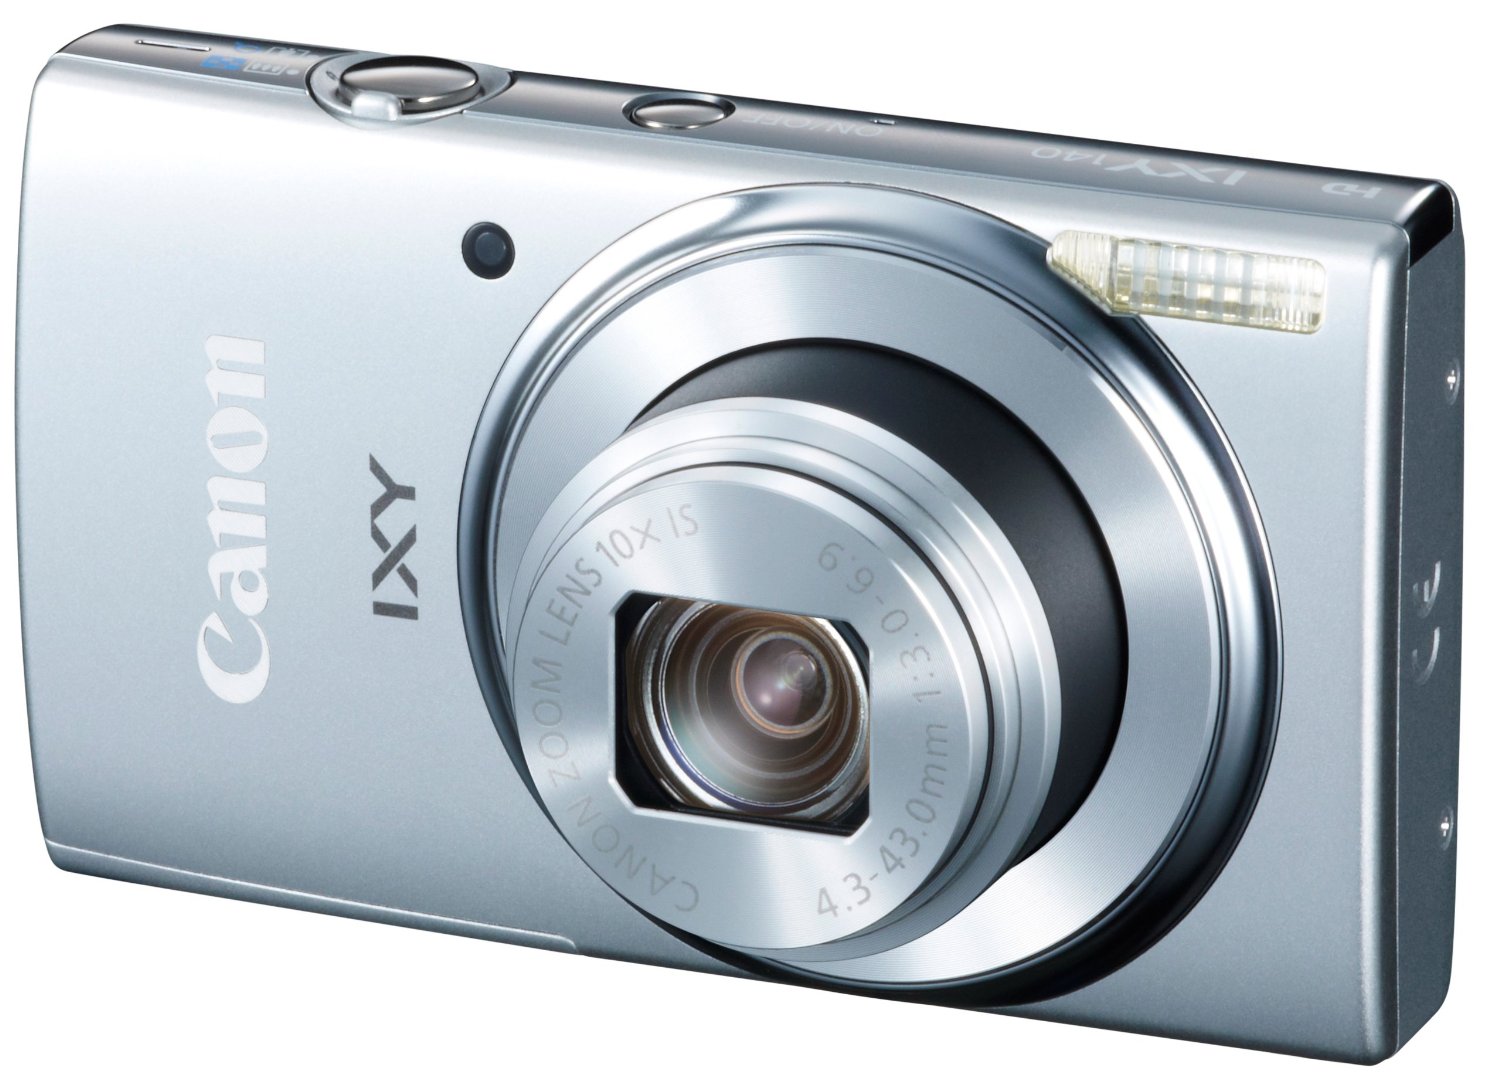 canon ixy 140 digital camera best at Brand Bazaar